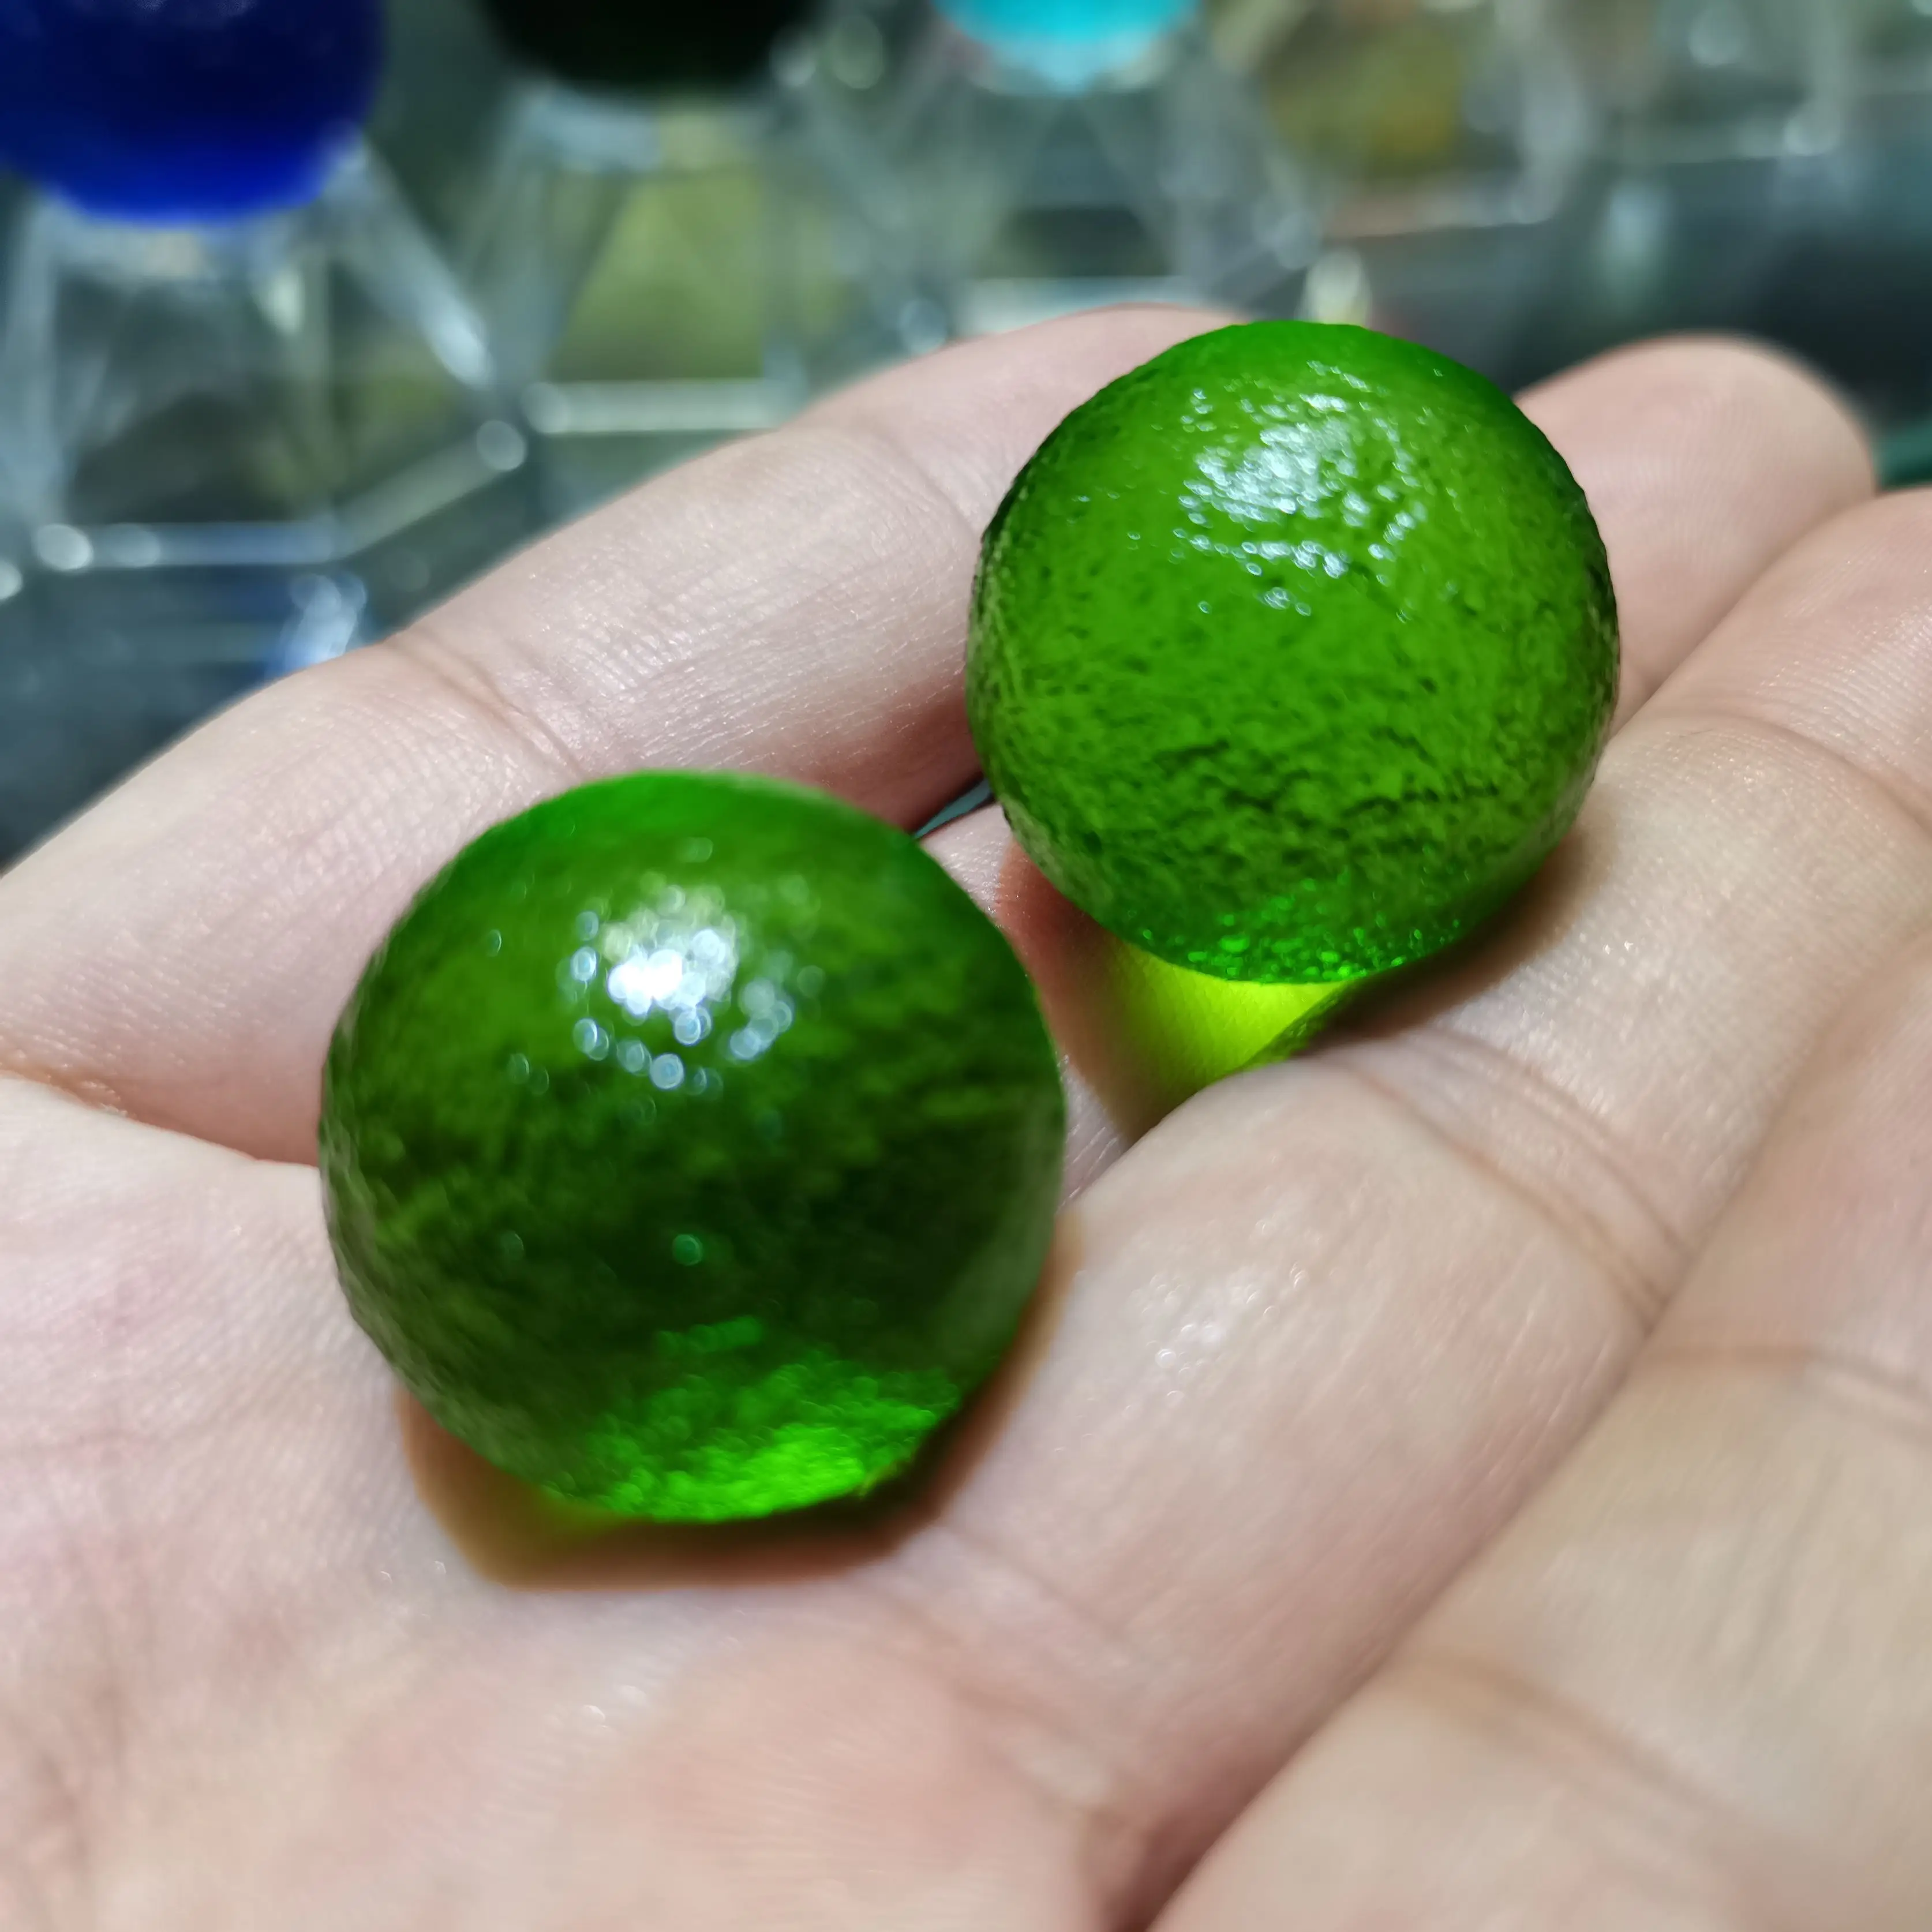 

1pcs green Gem Moldavite Czech Meteorite Impact Glass Beads Rough Stone Crystal Energy Stone 23mm